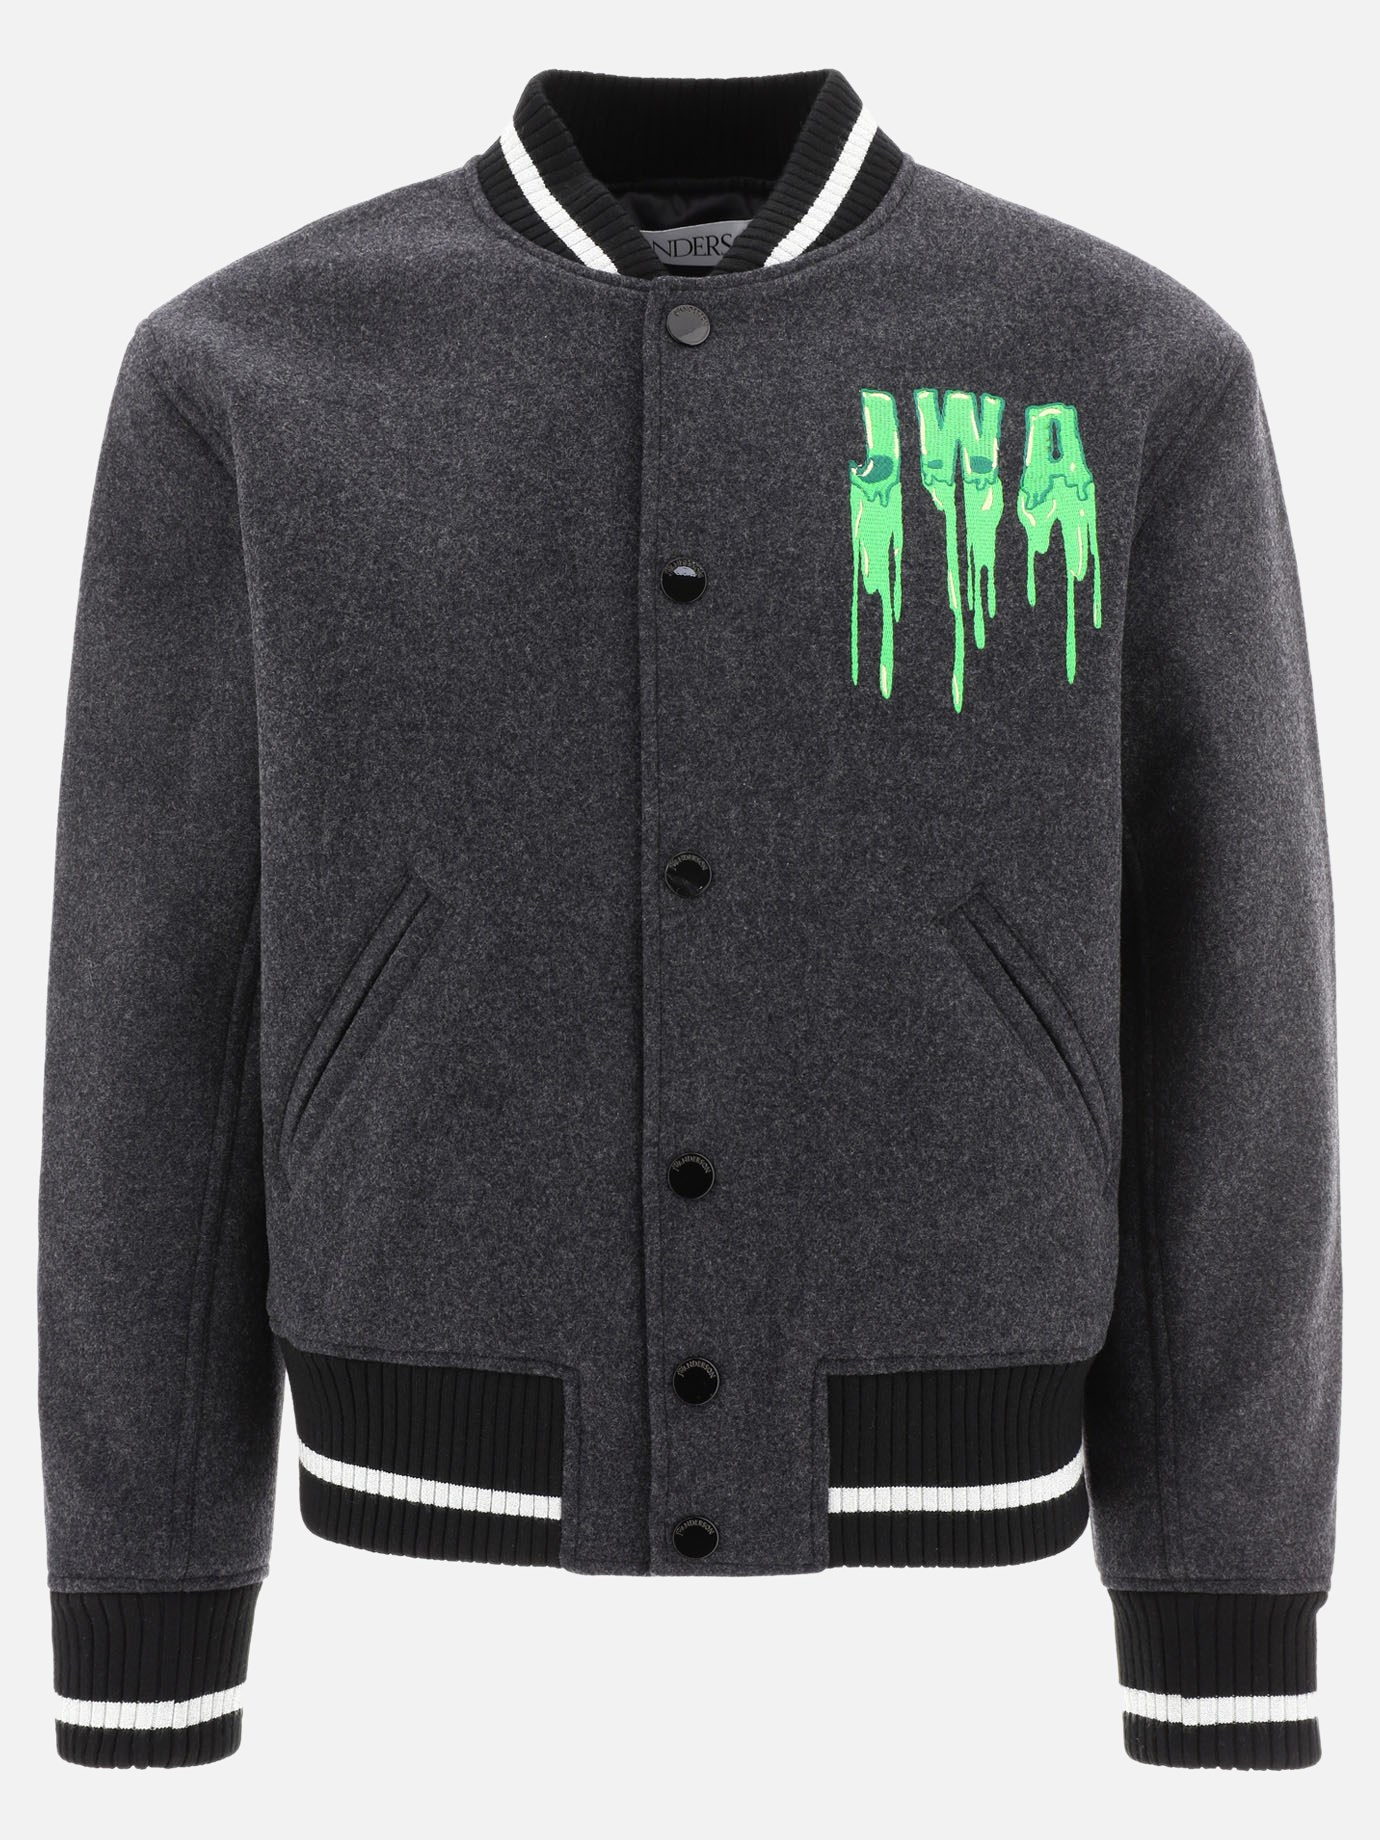 Embroidered bomber jacket